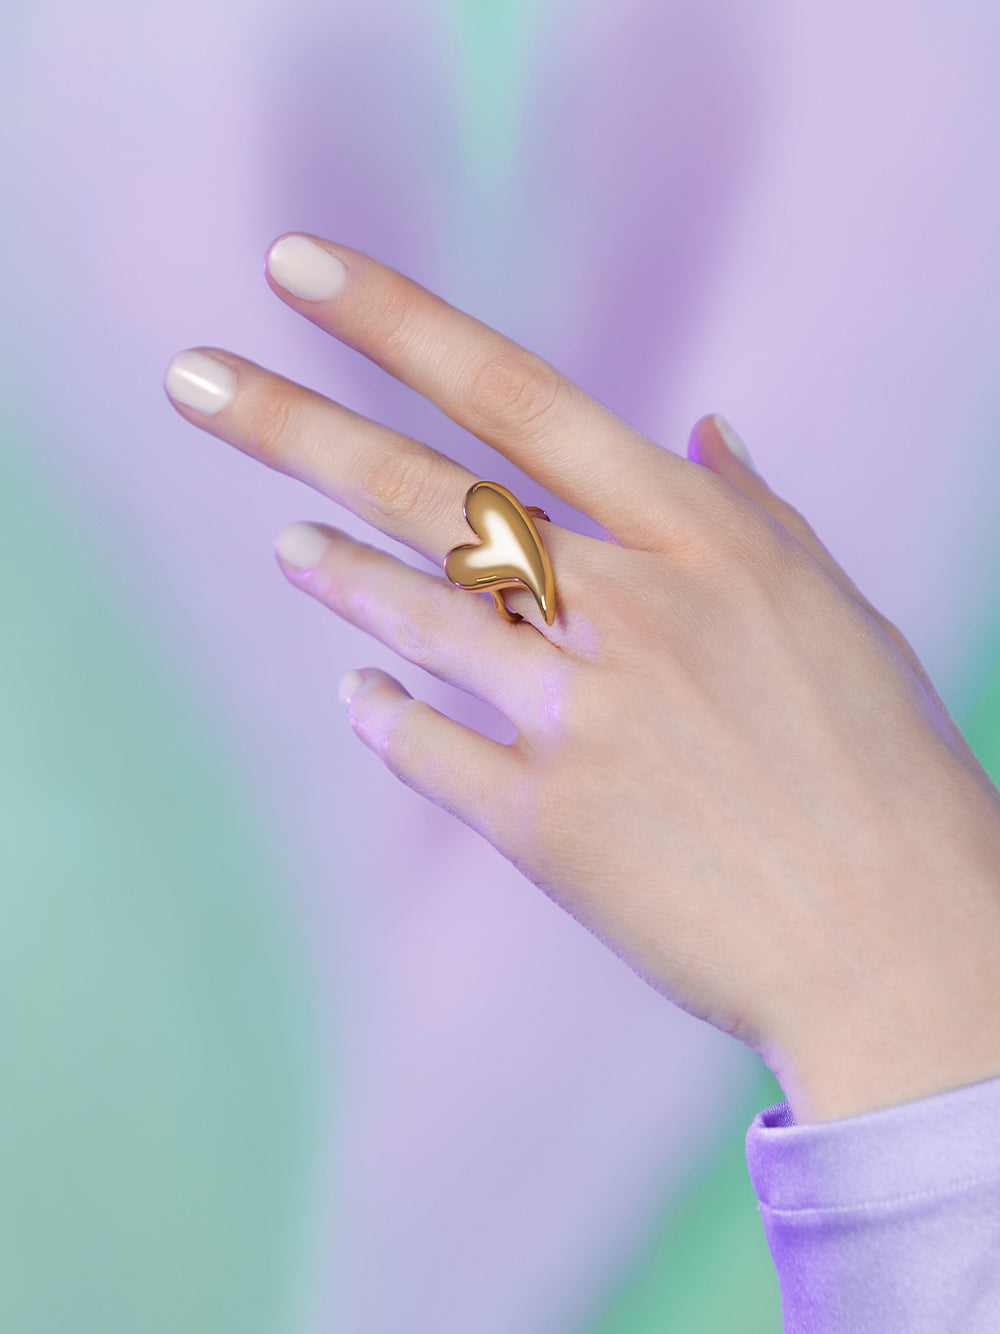 Costume Jewelry (No Precious Metals) | Ring | Metals) Gold